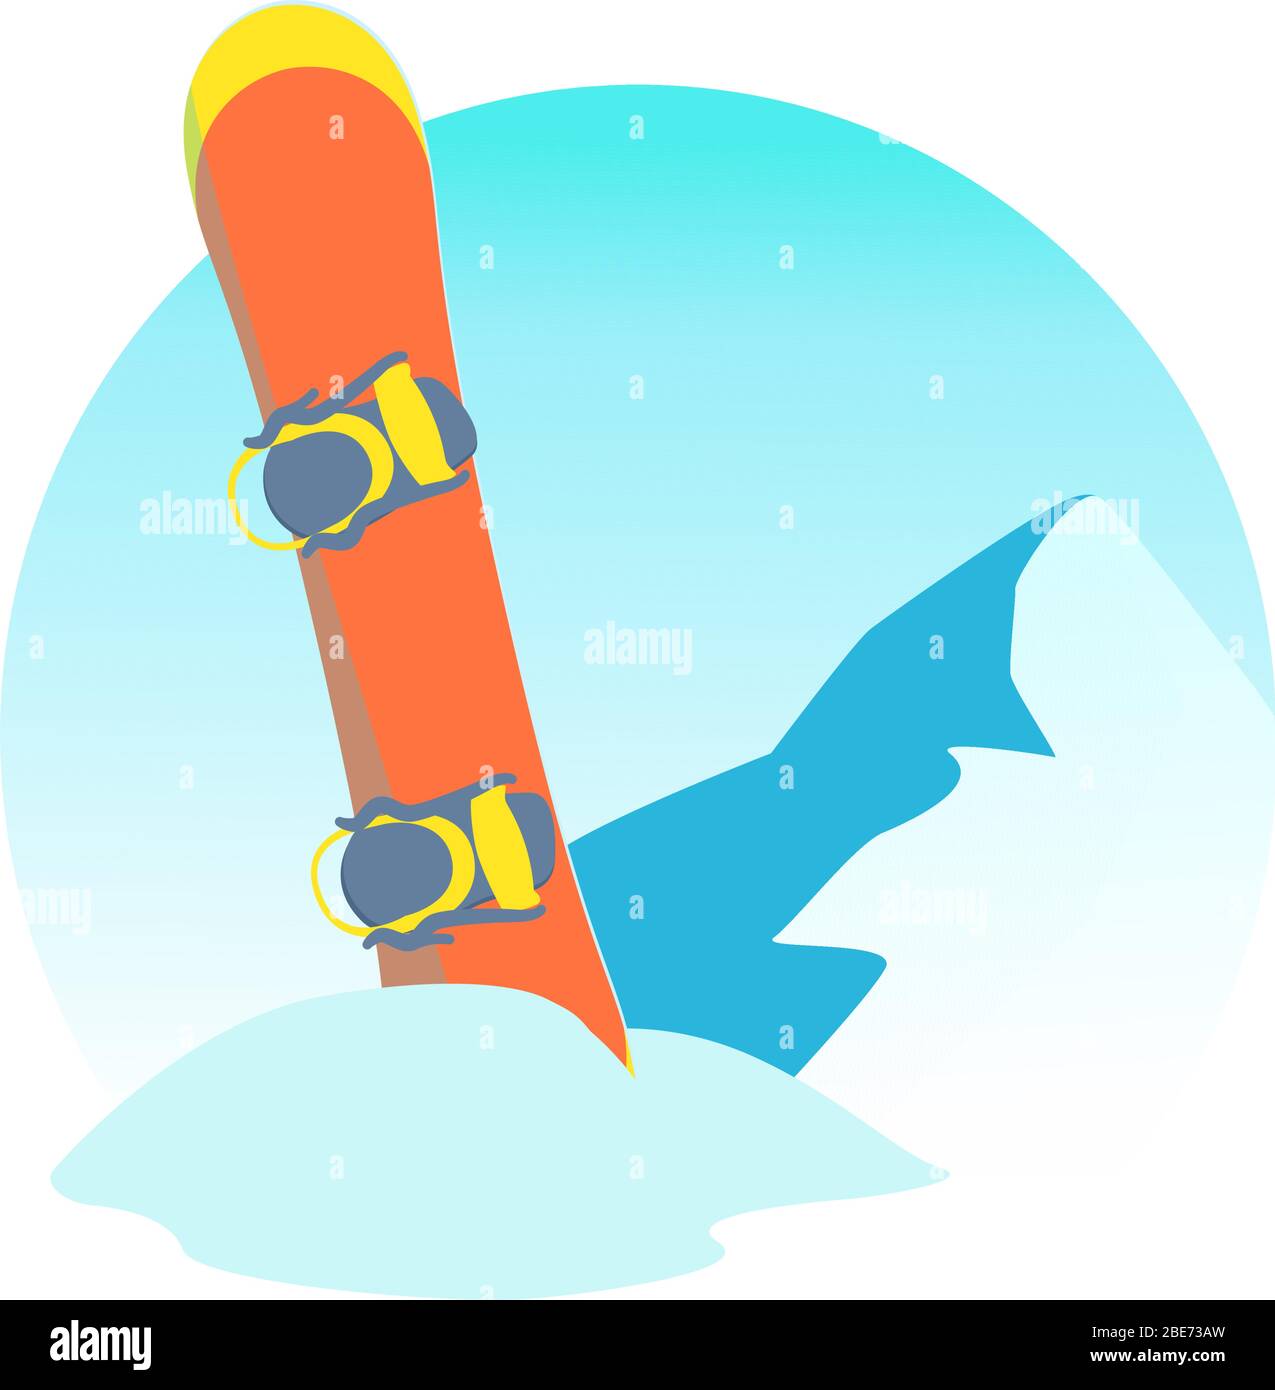 Snowboard round illustration in cartoon style. Ski resort banner Isolated vector. Snowy mountain logo design. Winter season sport activity emblem. Snowboarding board flat icon badge. Stock Vector